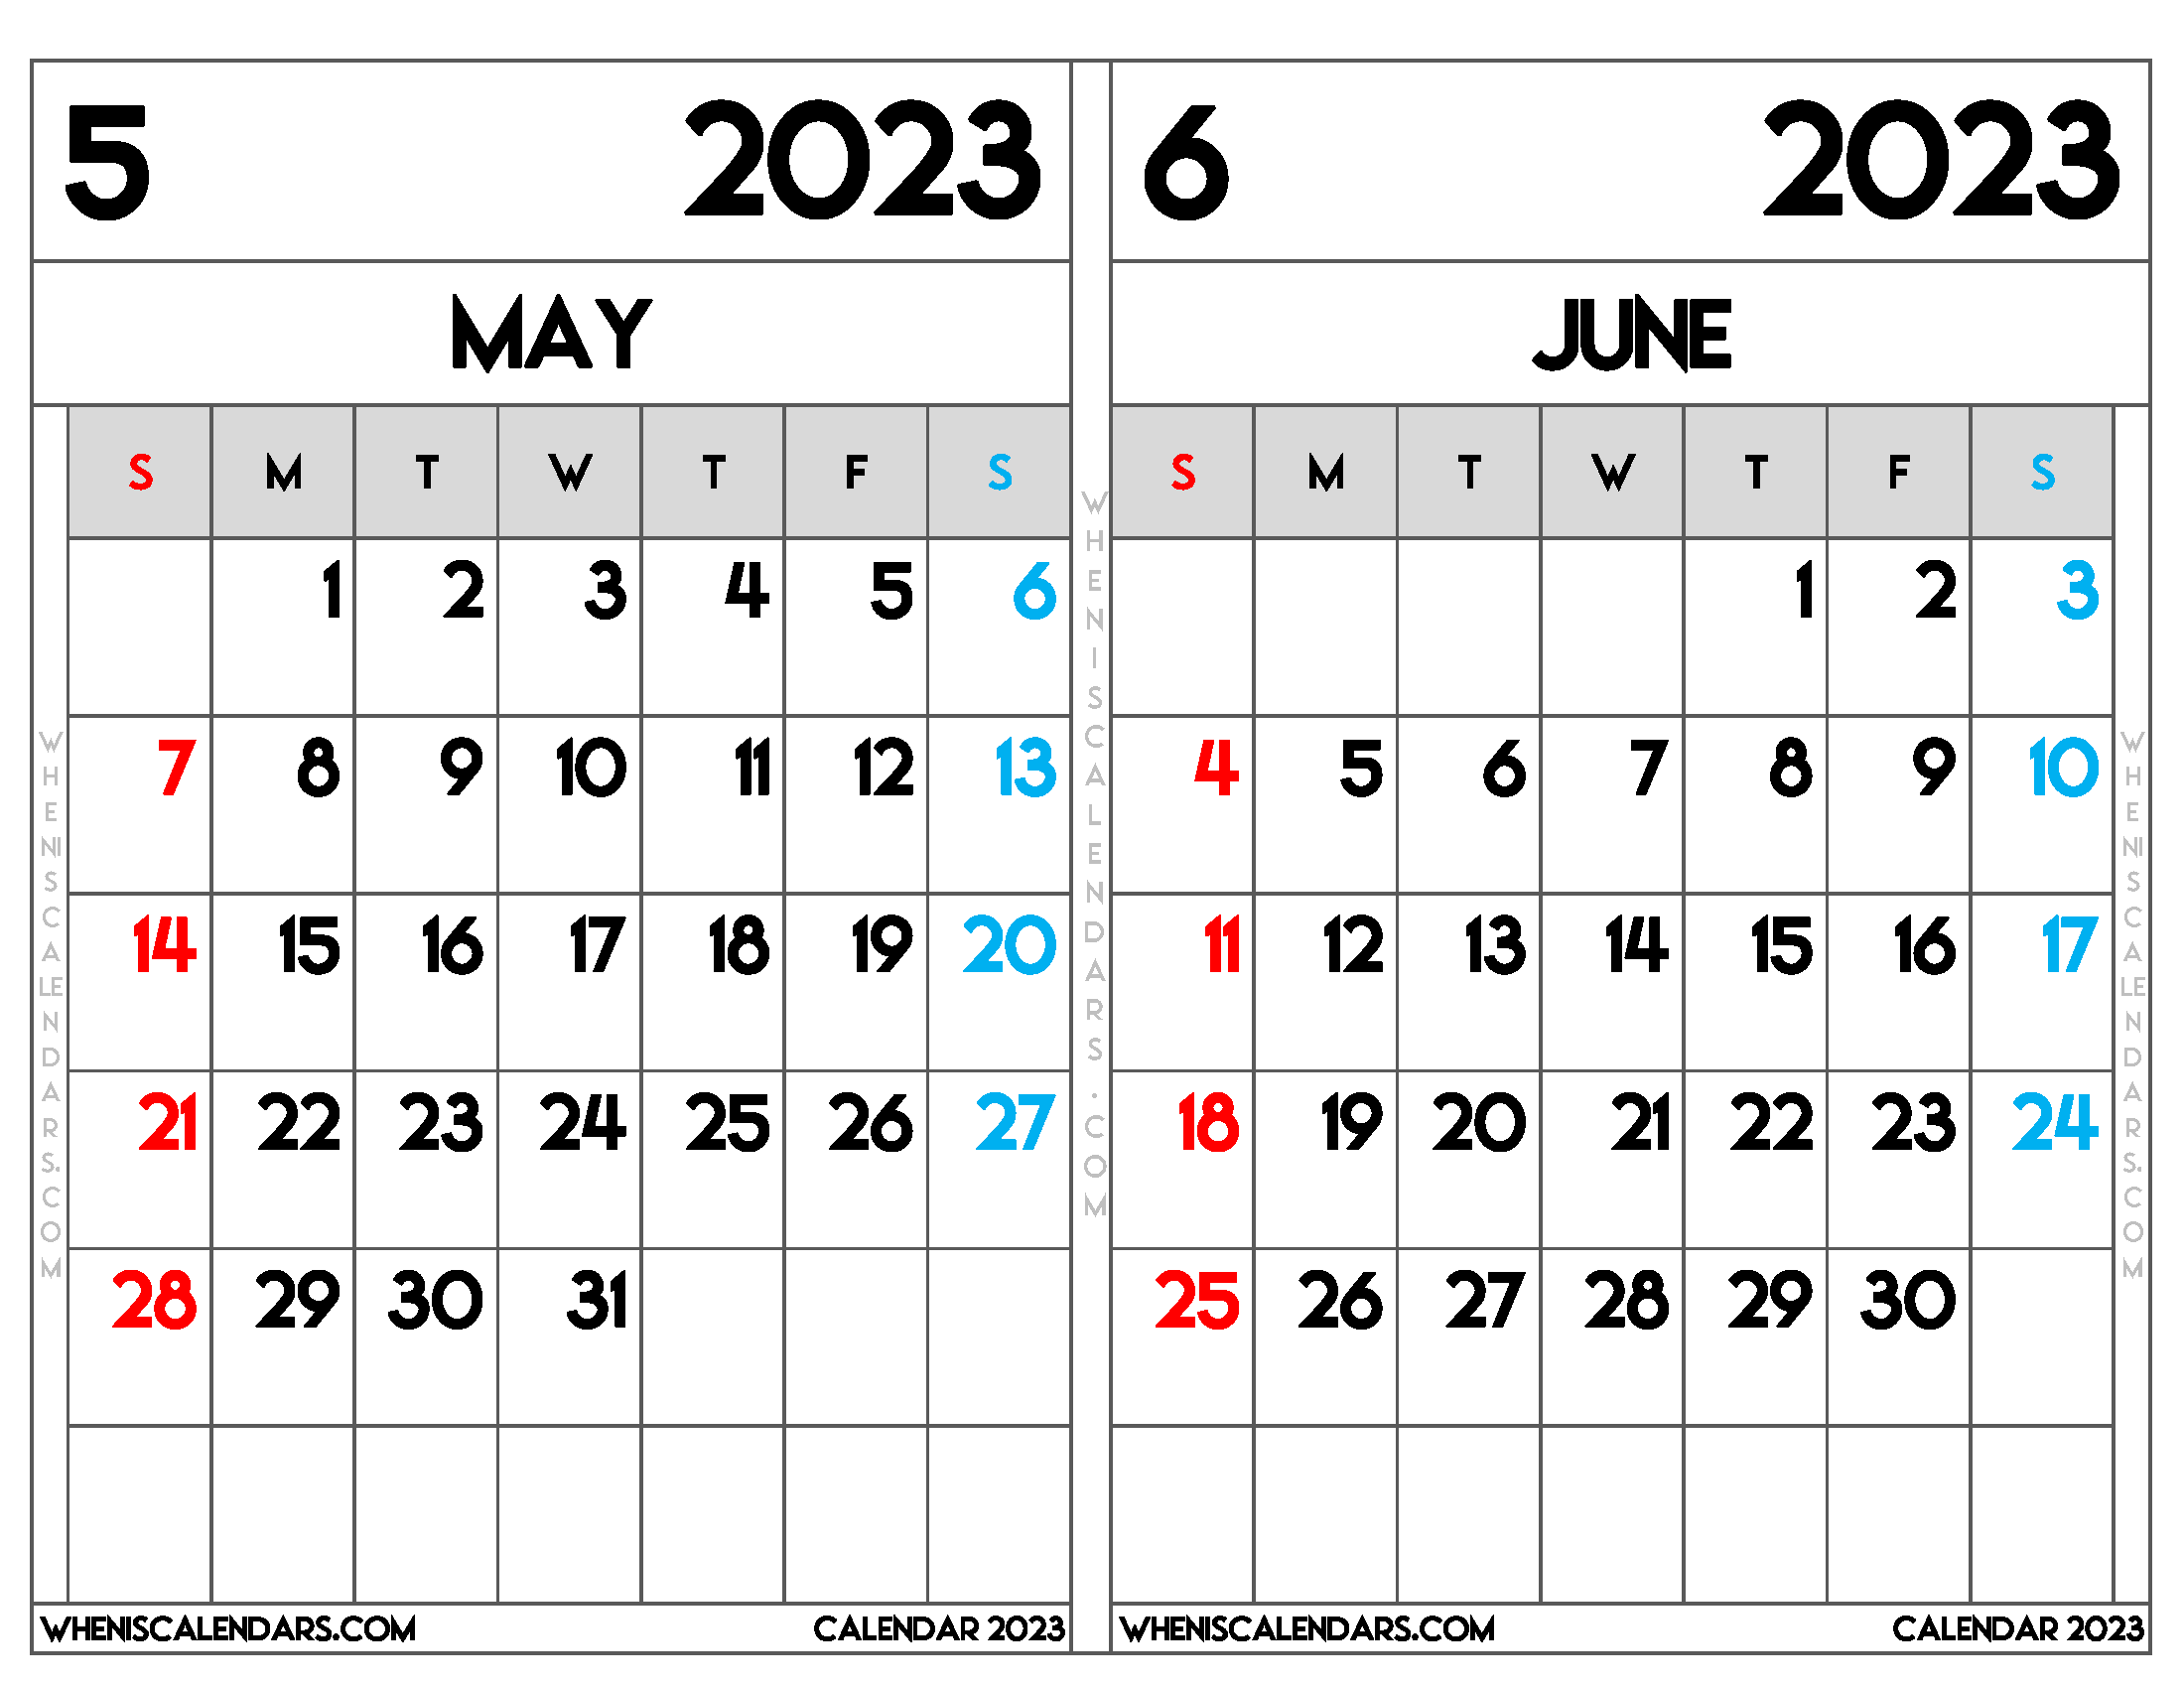 Download Free May June 2023 Calendar Printable as PDF and PNG Image